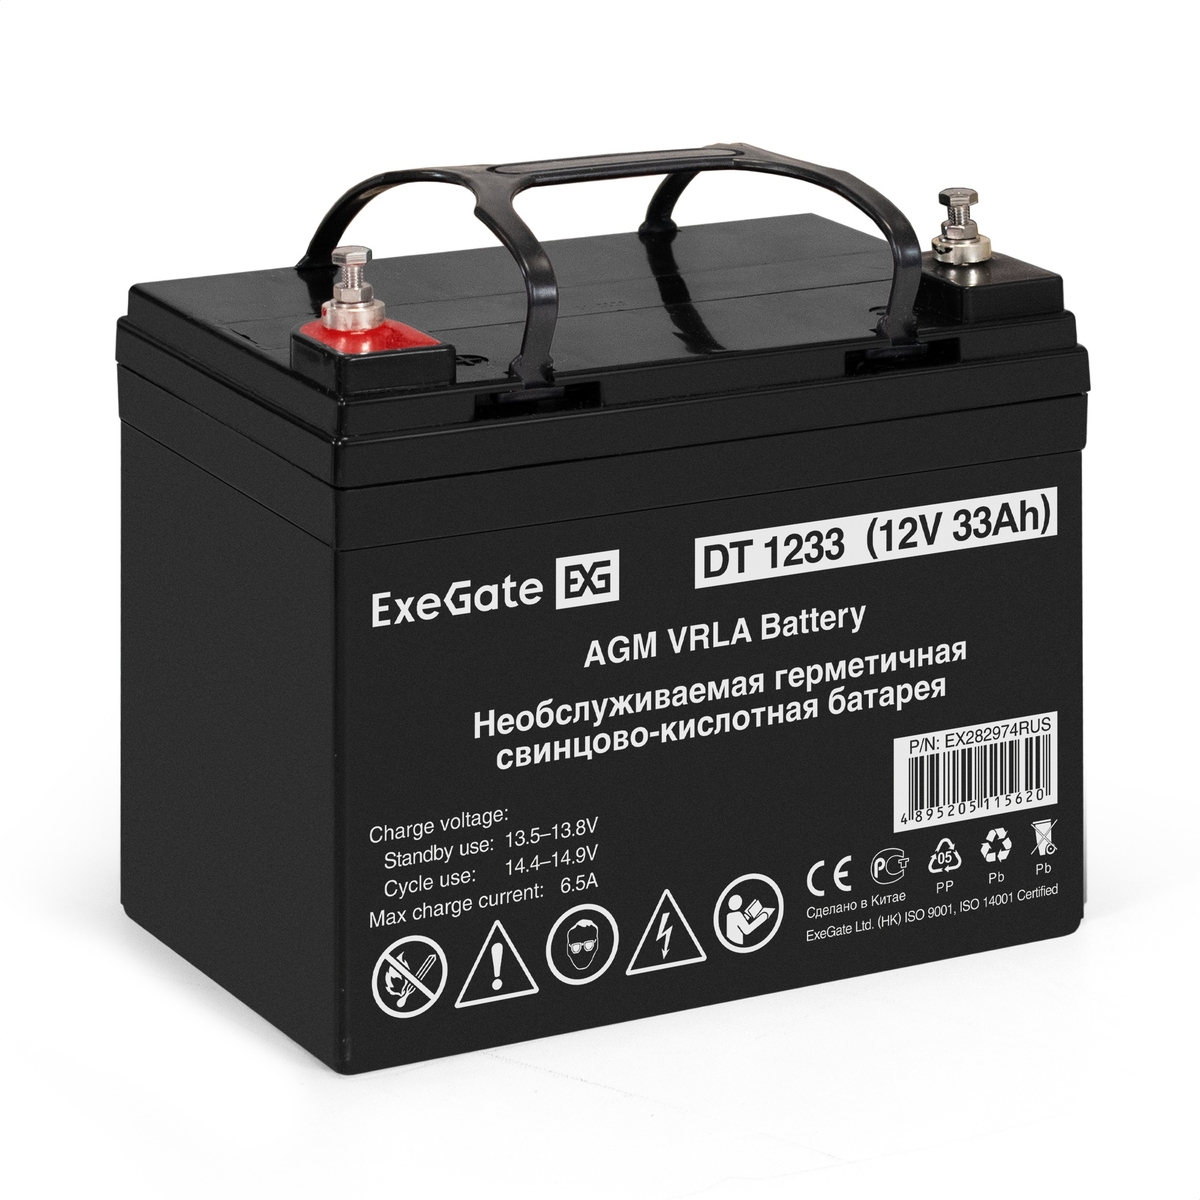 Battery ExeGate DT 1233